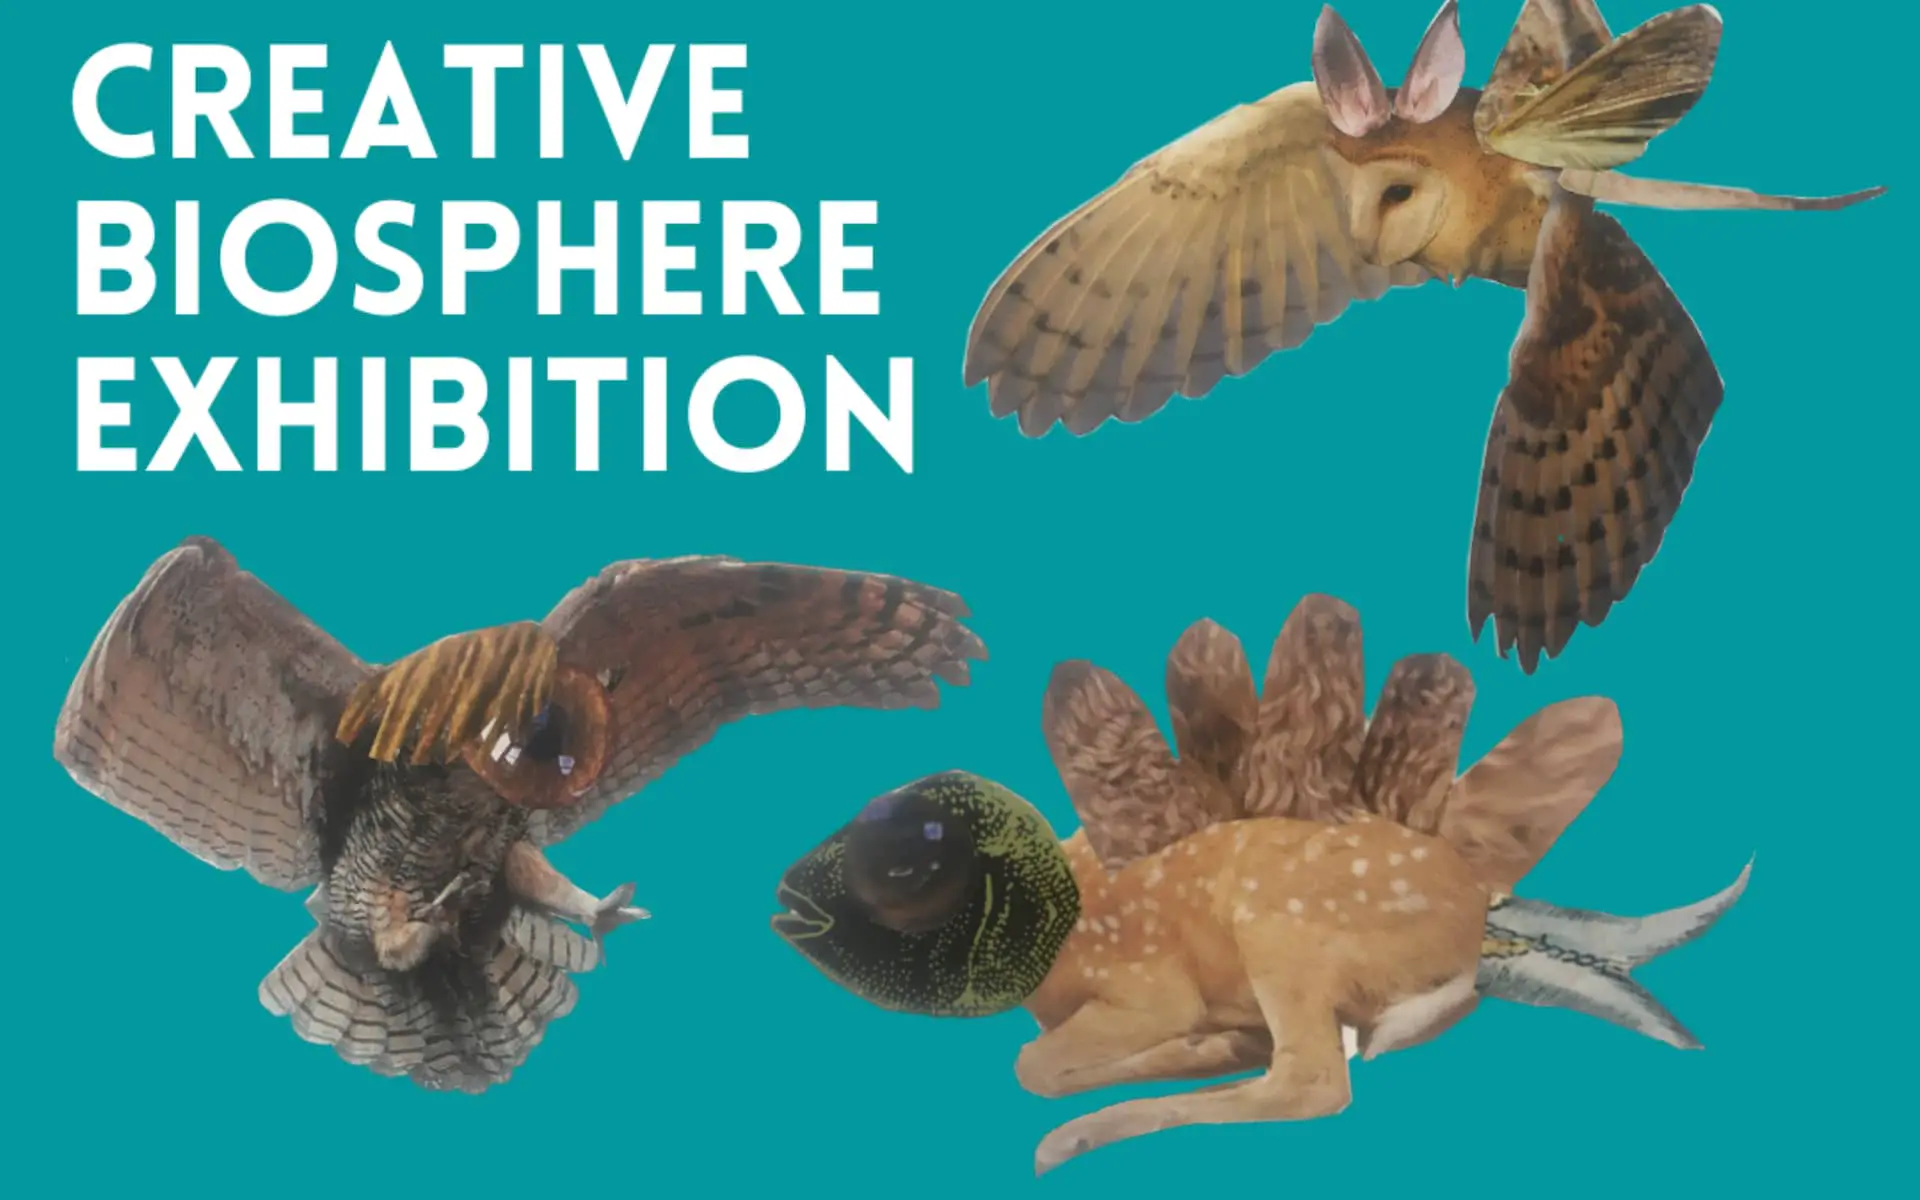 Creative Biosphere Exhibition - Montage of creatures